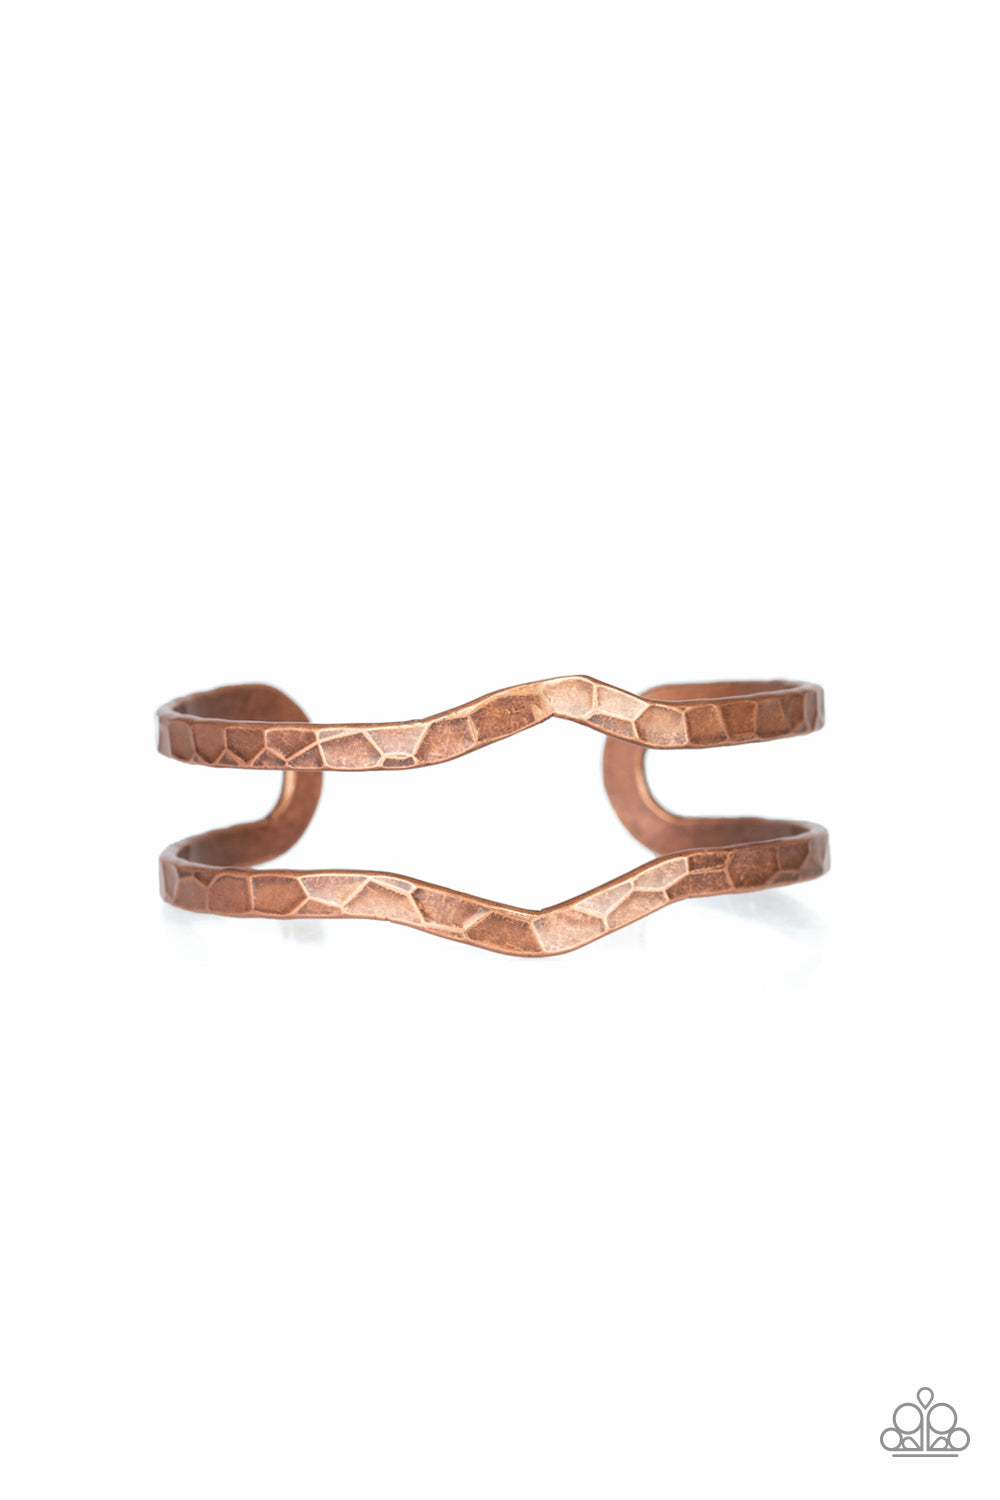 Paparazzi Bracelets - Highland Heiress - Copper